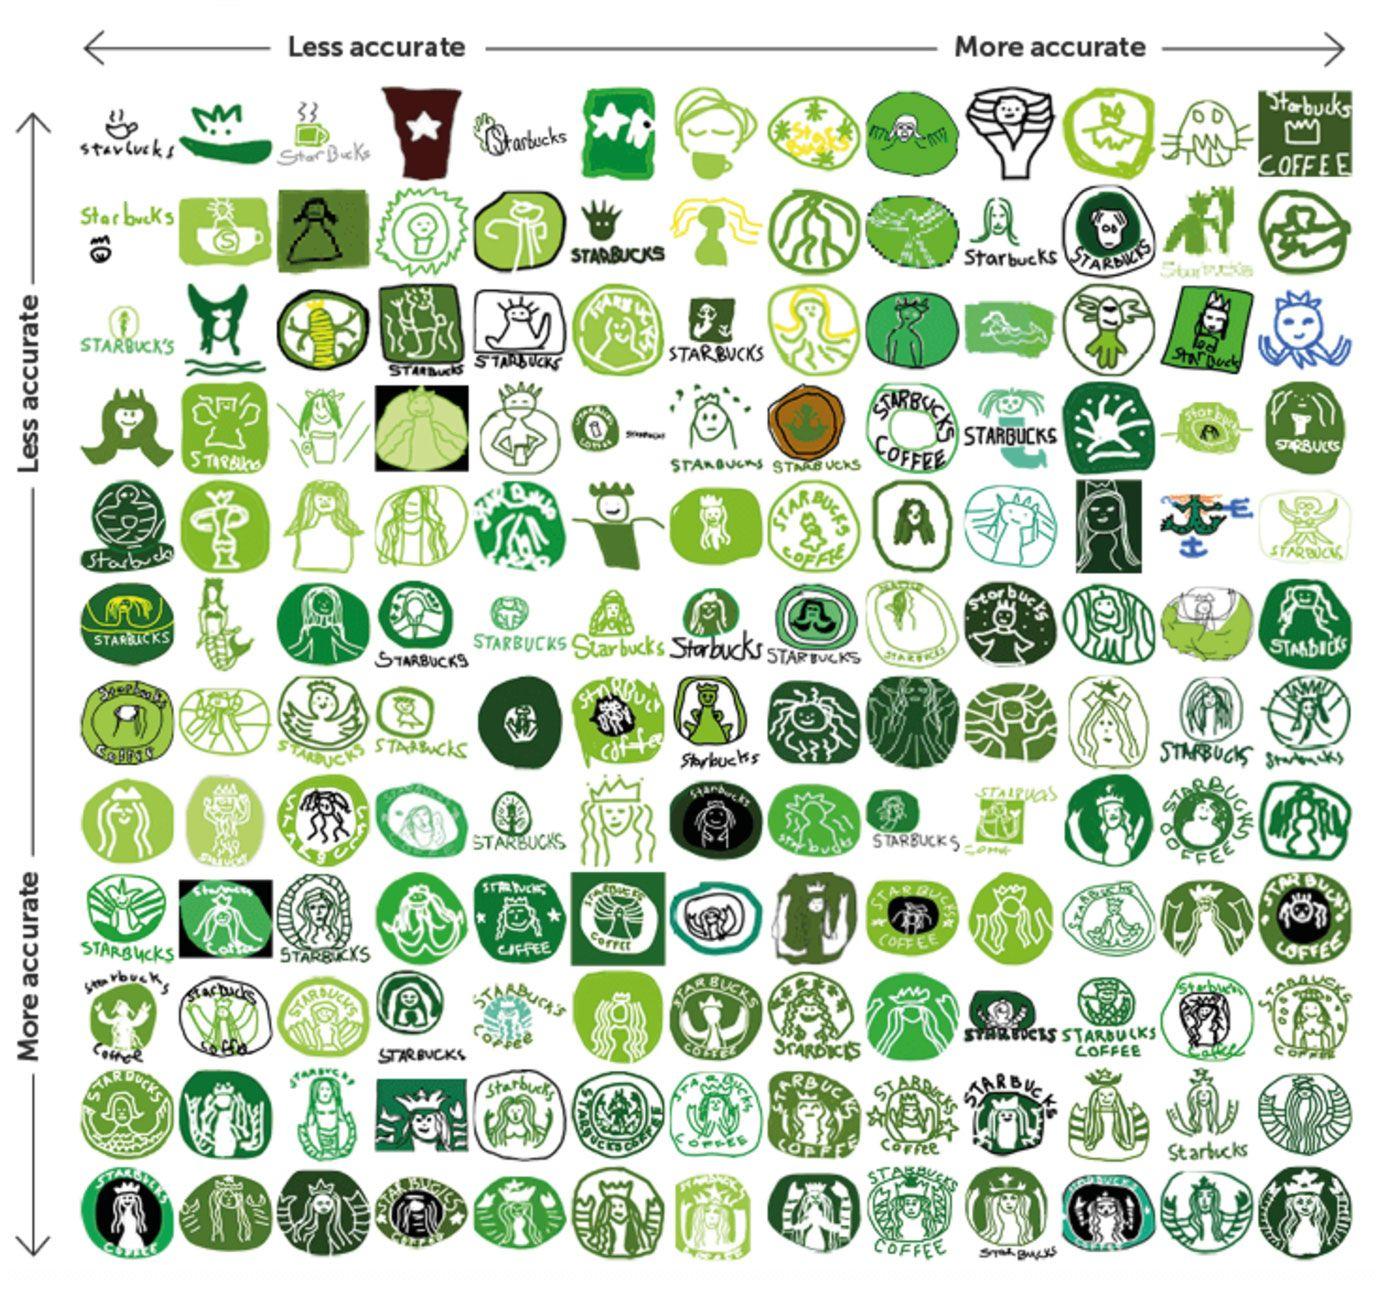 Most Popular Green Logo - Famous logos drawn from memory | Logo Design Love